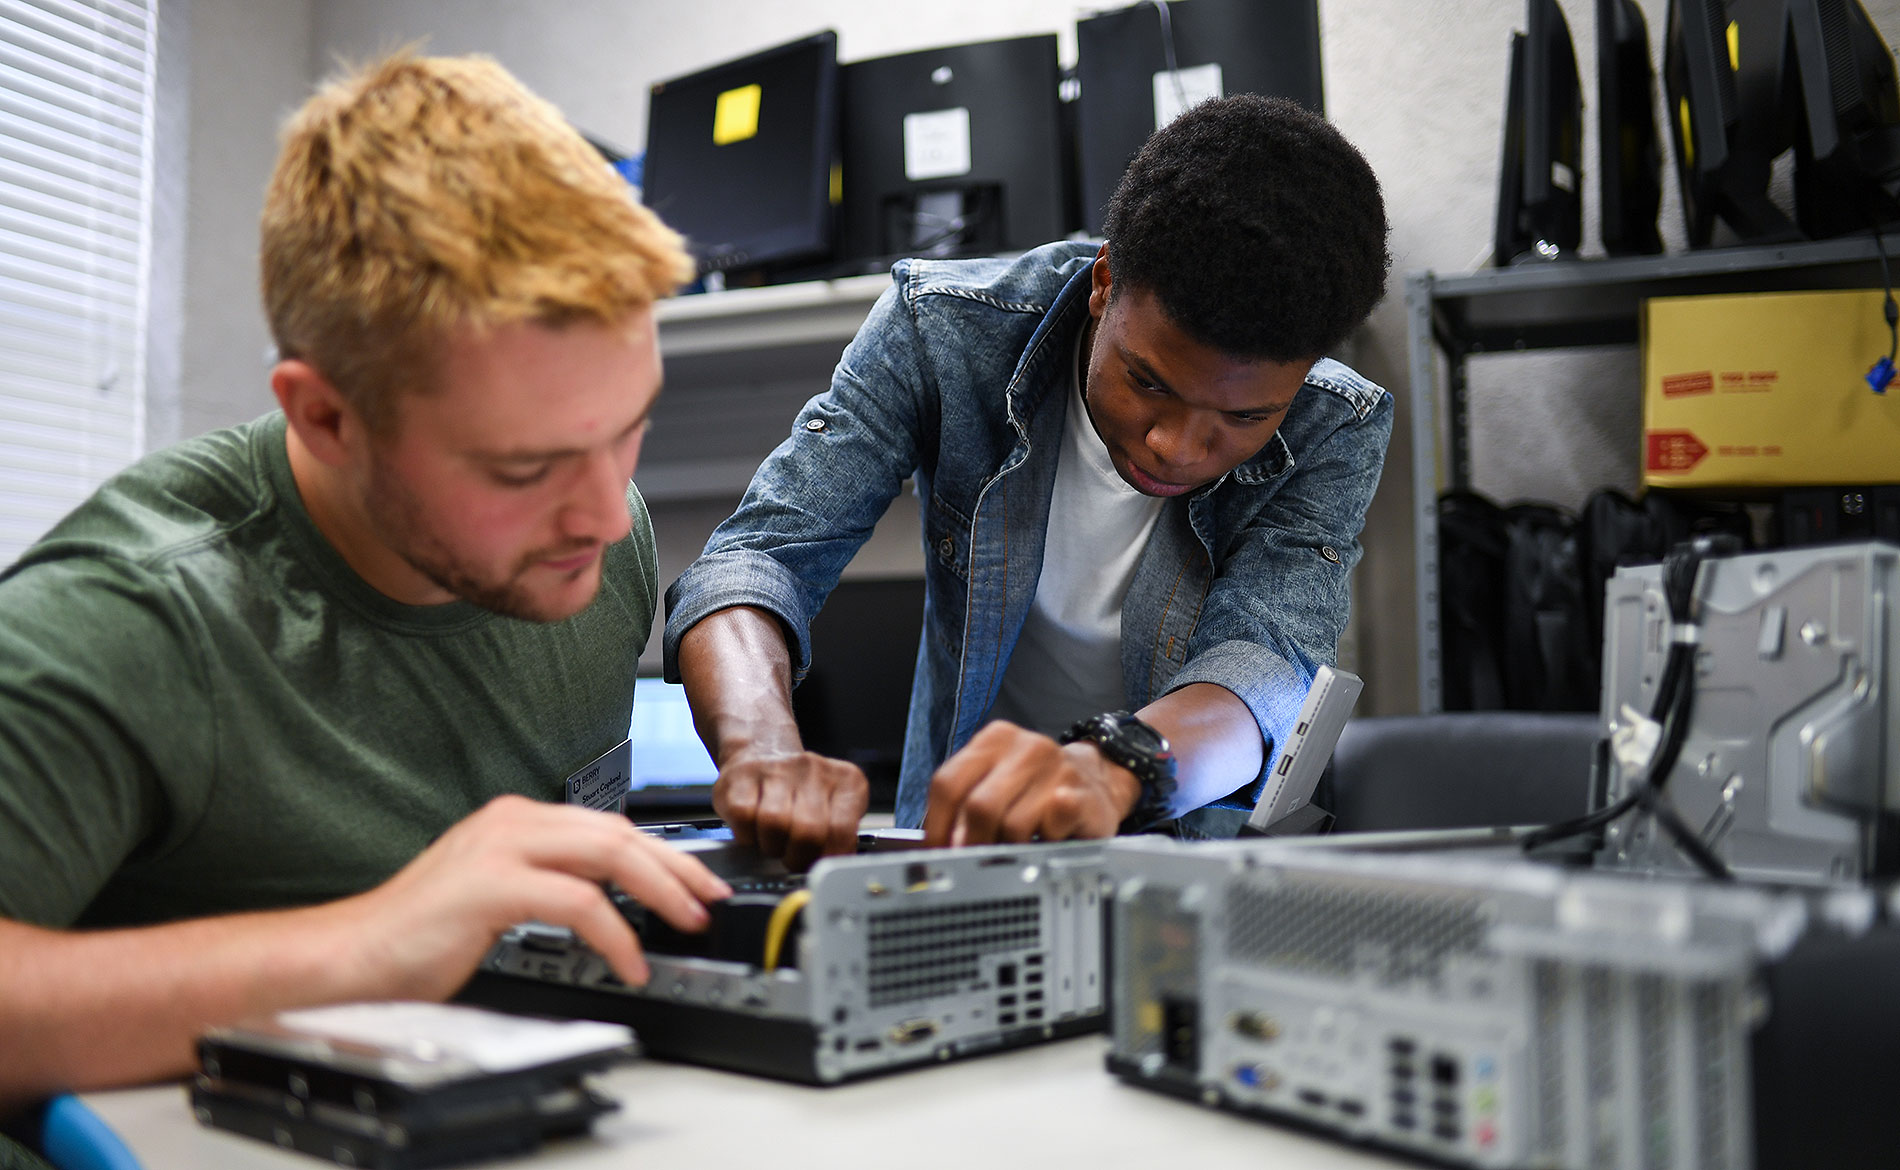 Students building a computer